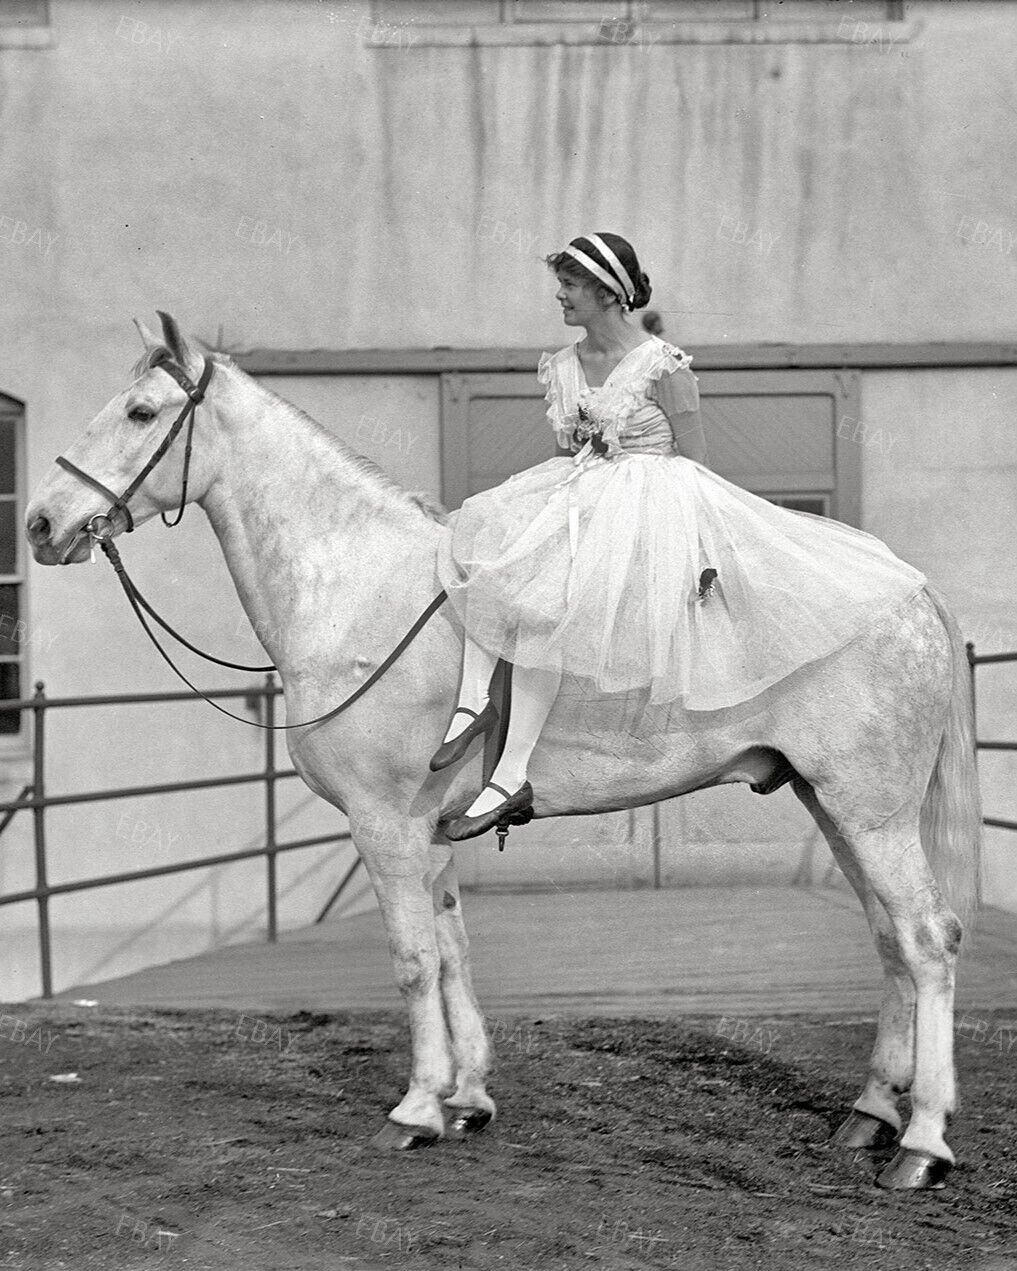 8x10 Poster Print Society Circus Ruth Anderson Riding White Stallion